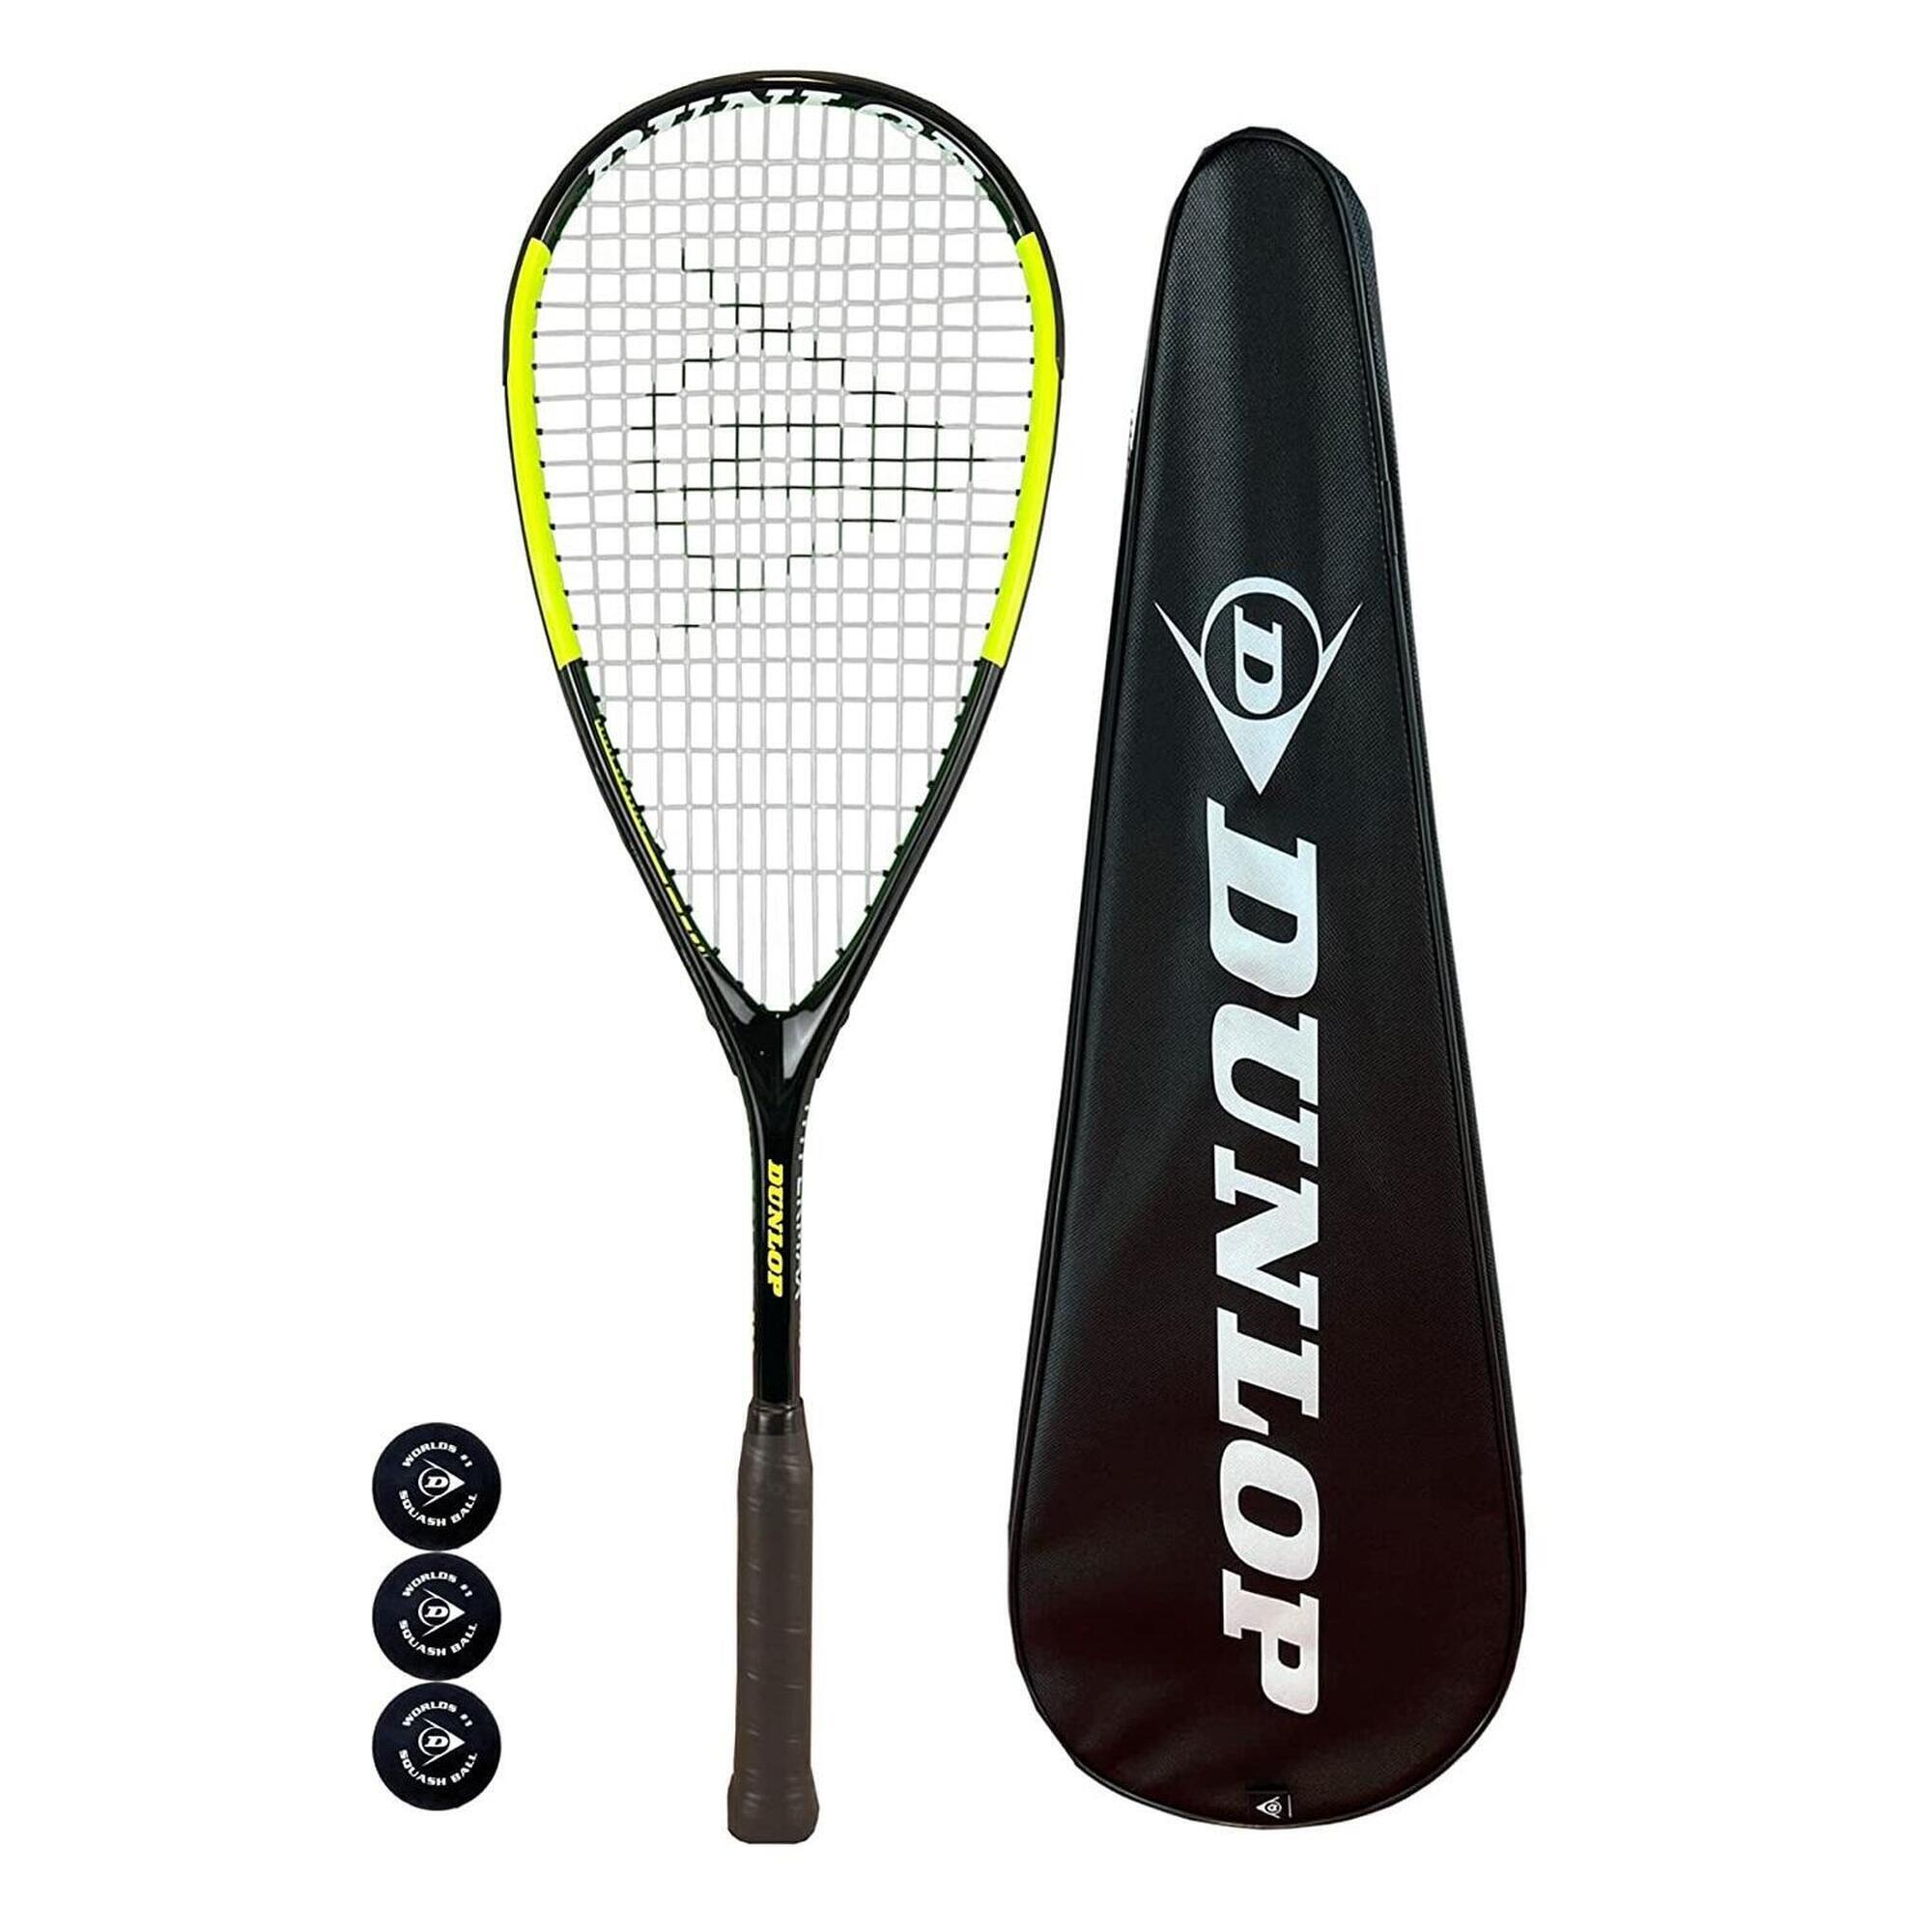 DUNLOP Dunlop Hypermax Pro Squash Racket, inc Full Protective Cover & 3 Squash Balls